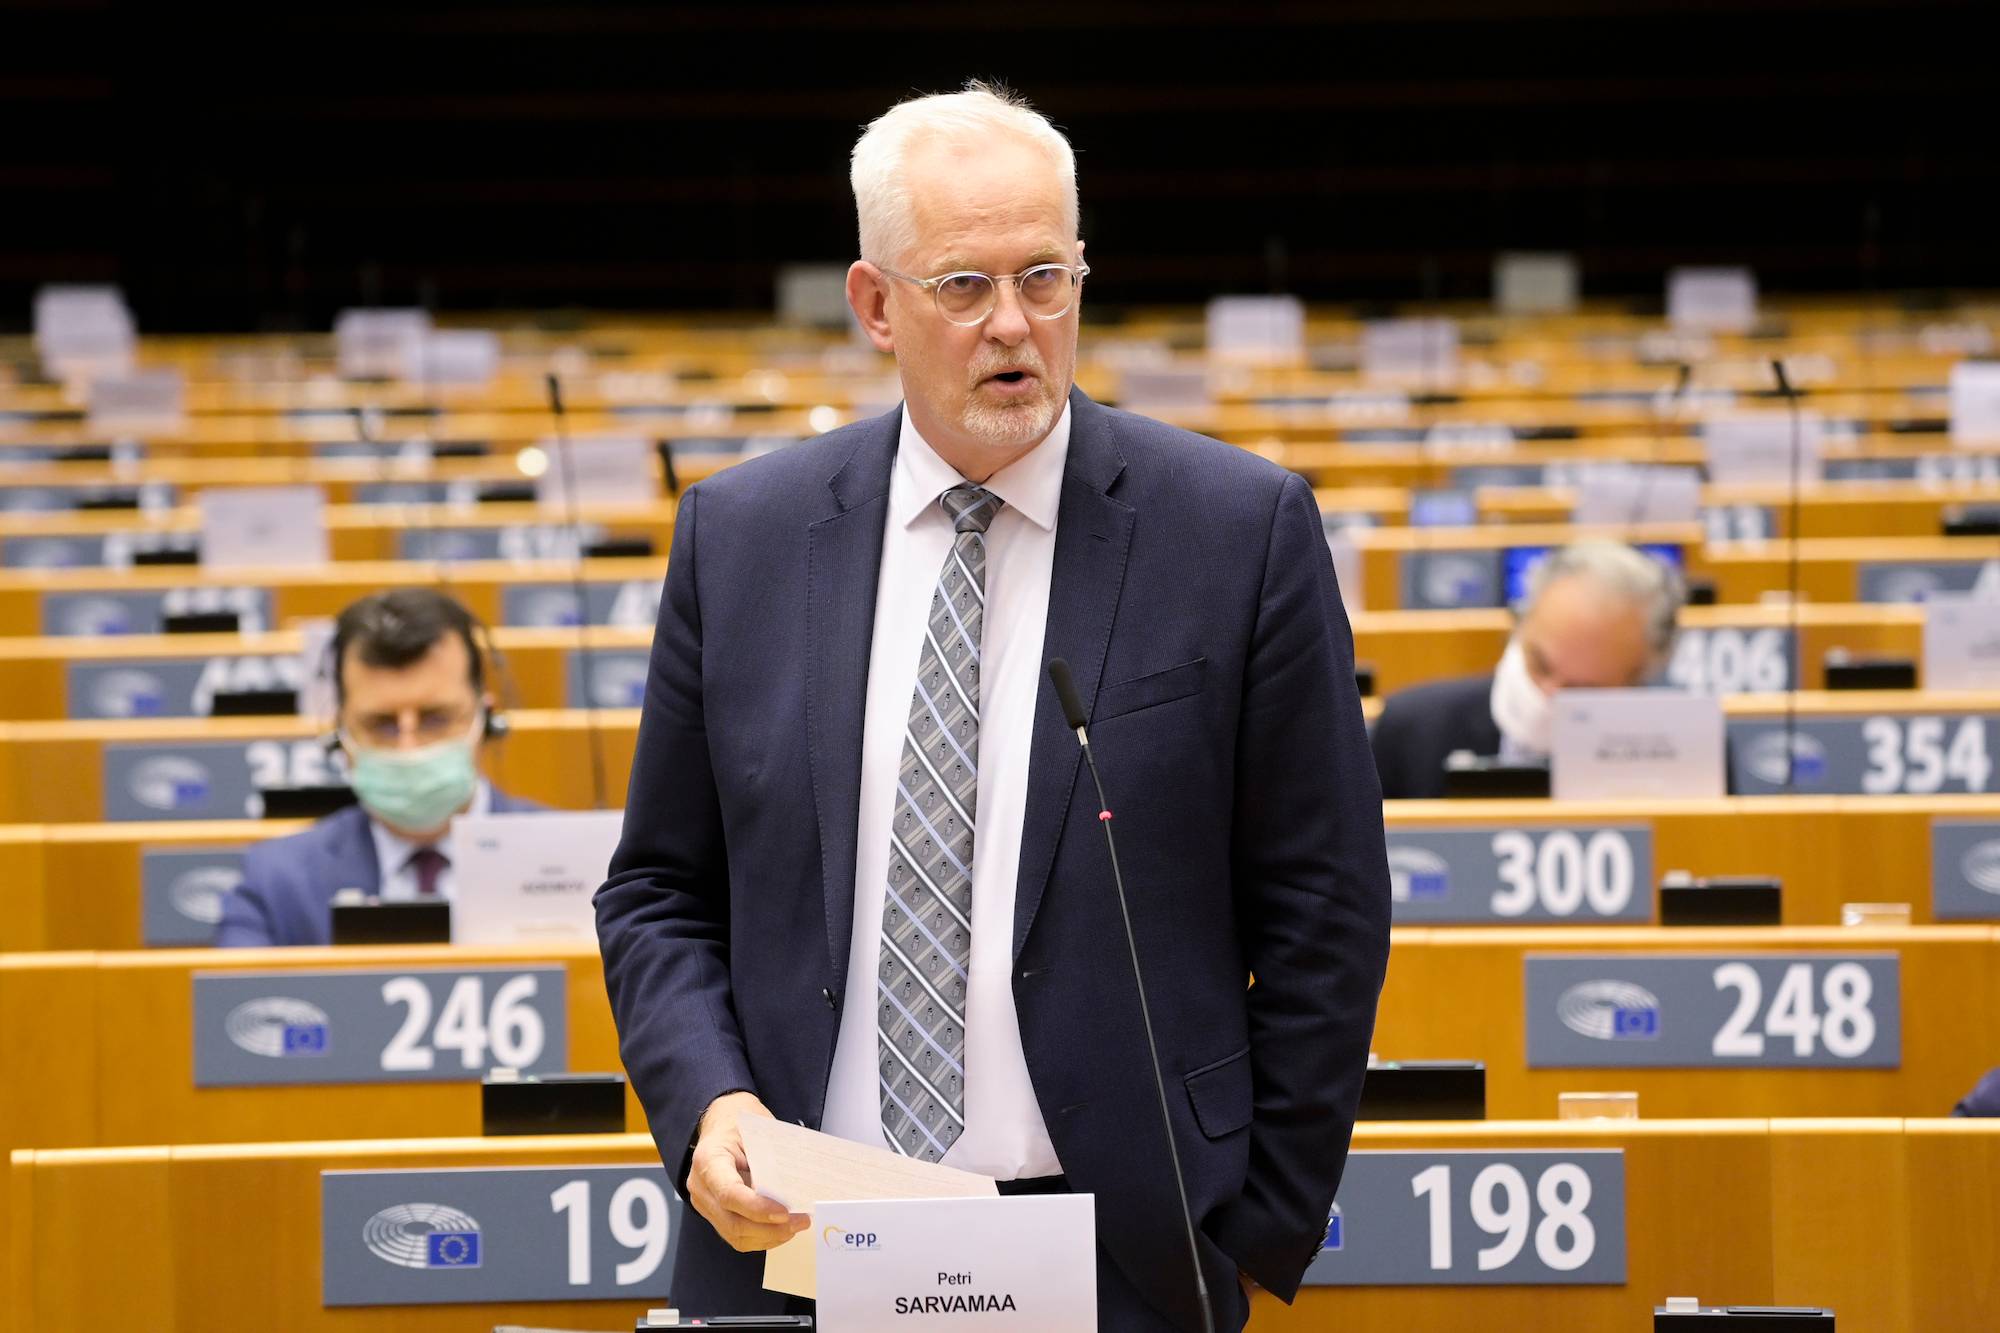 Petri Sarvamaa w Parlamencie Europejskim